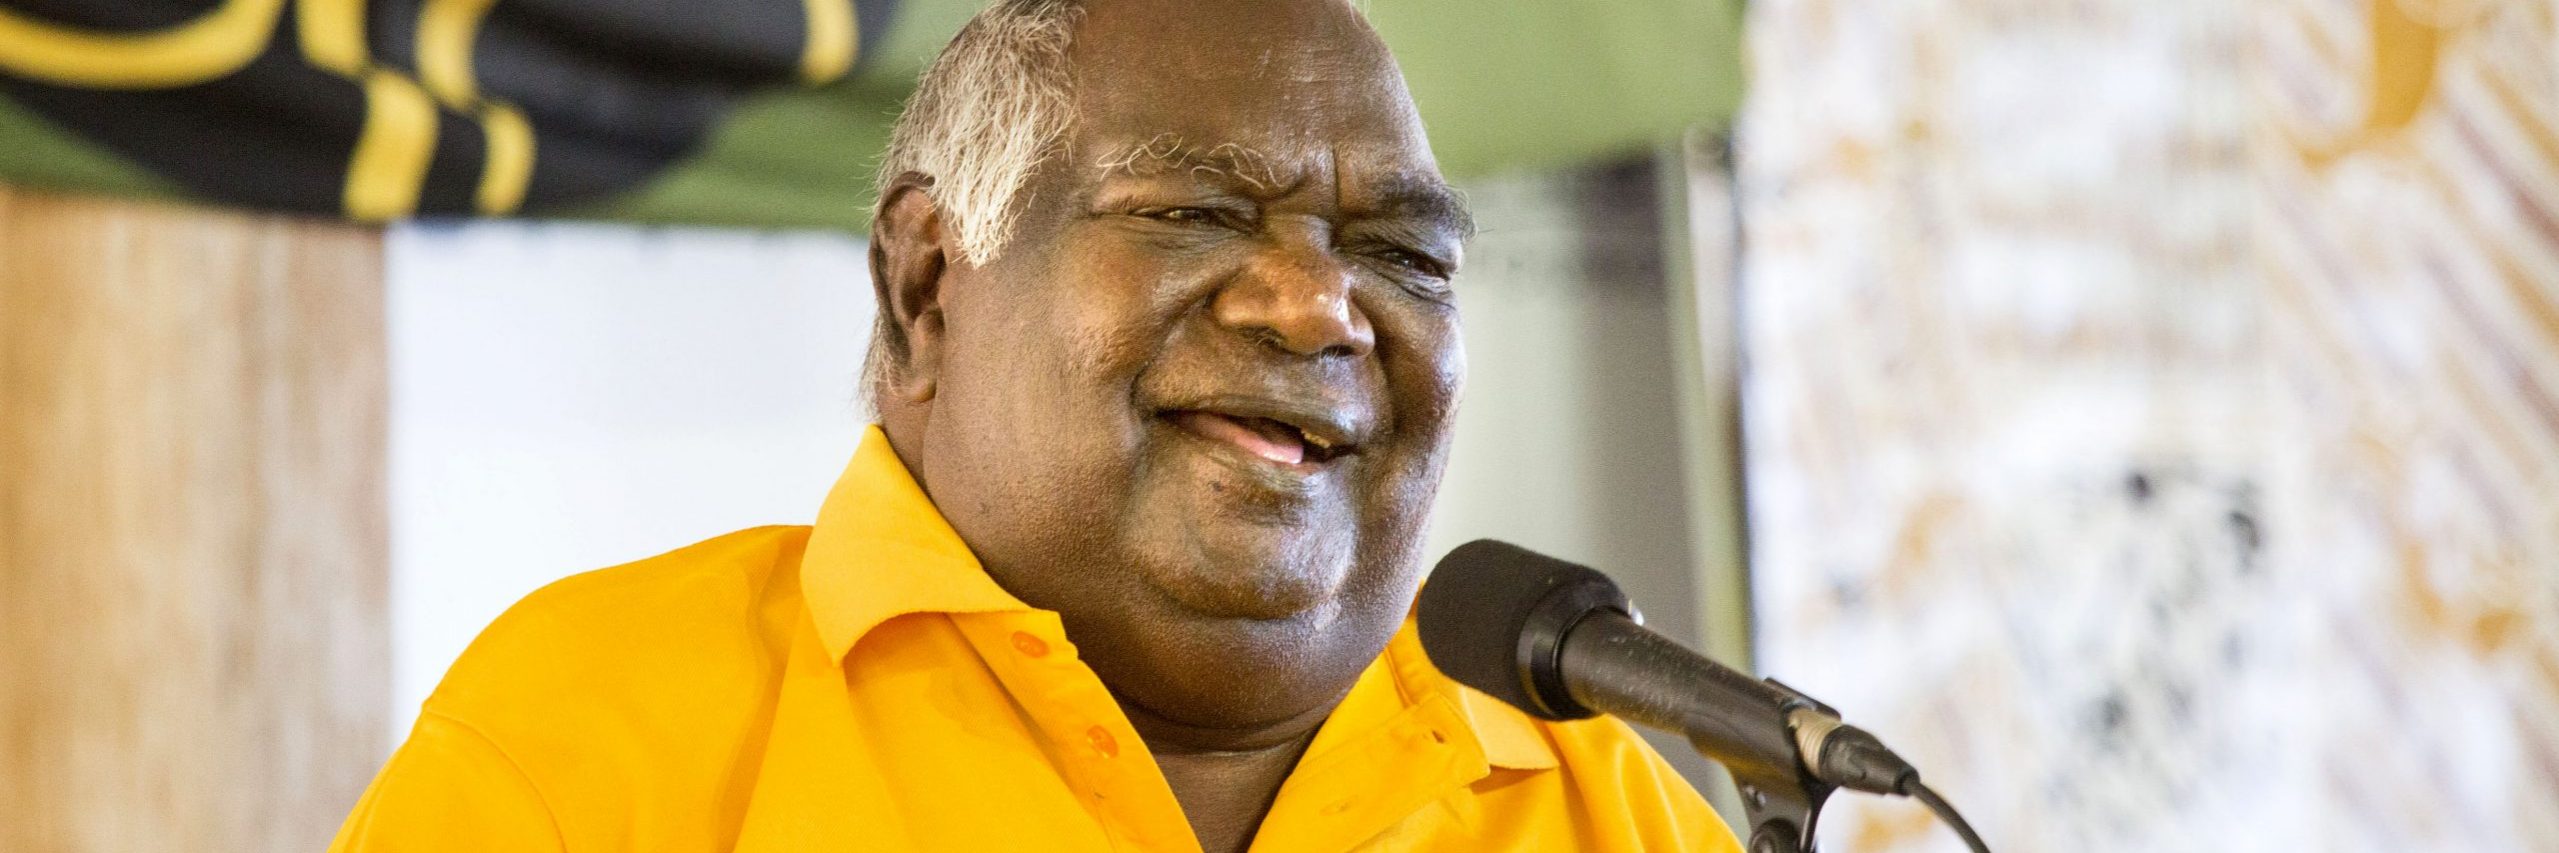 Yunupingu, beloved Aboriginal leader and activist, has passed away at 74